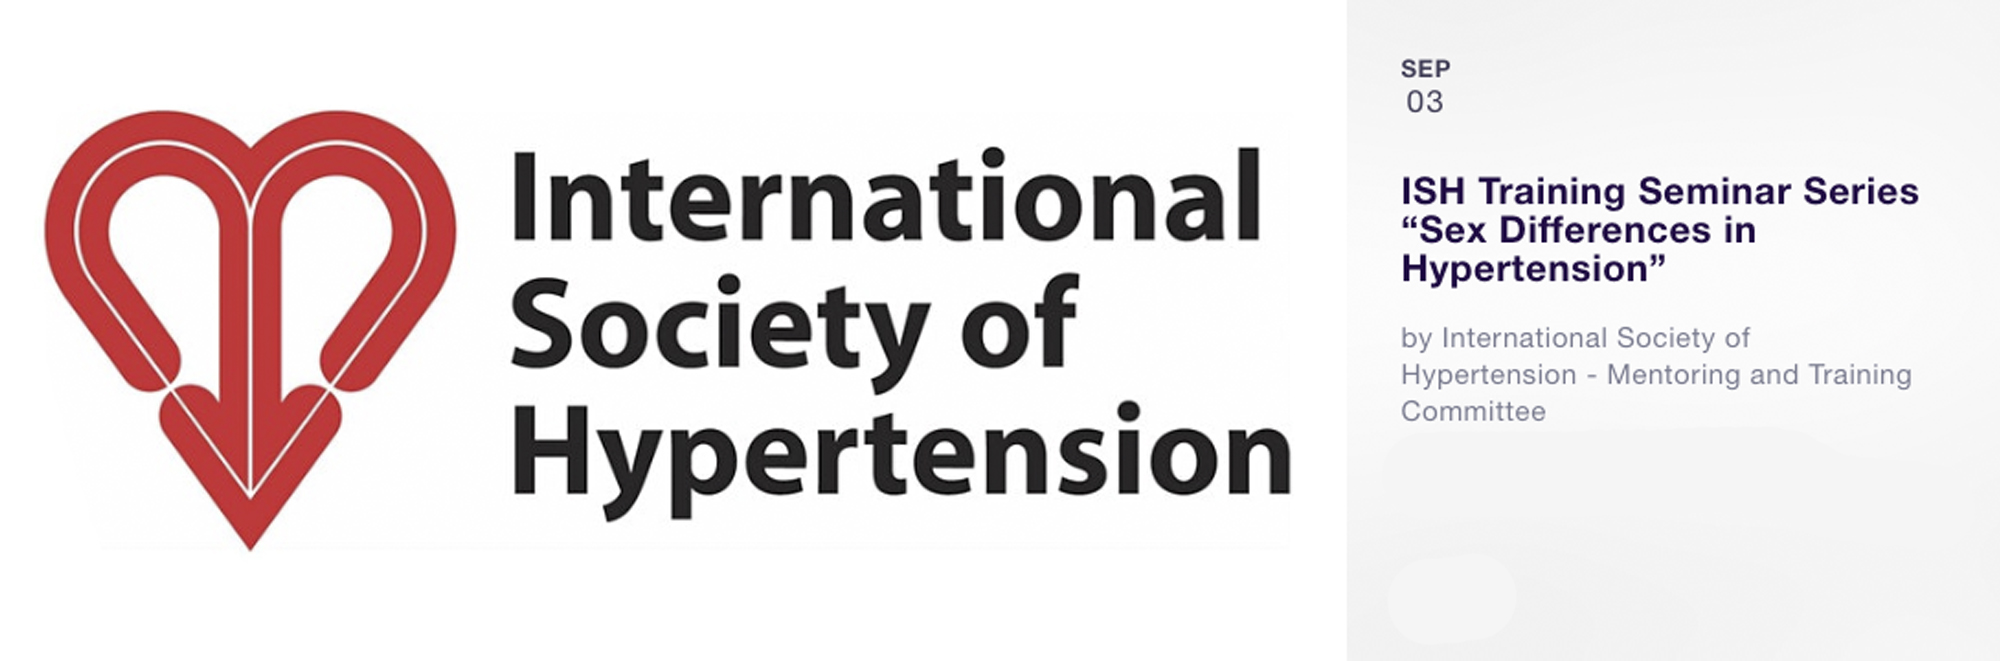 International Society of Hypertension Training Seminar Series “Sex Differences in Hypertension”